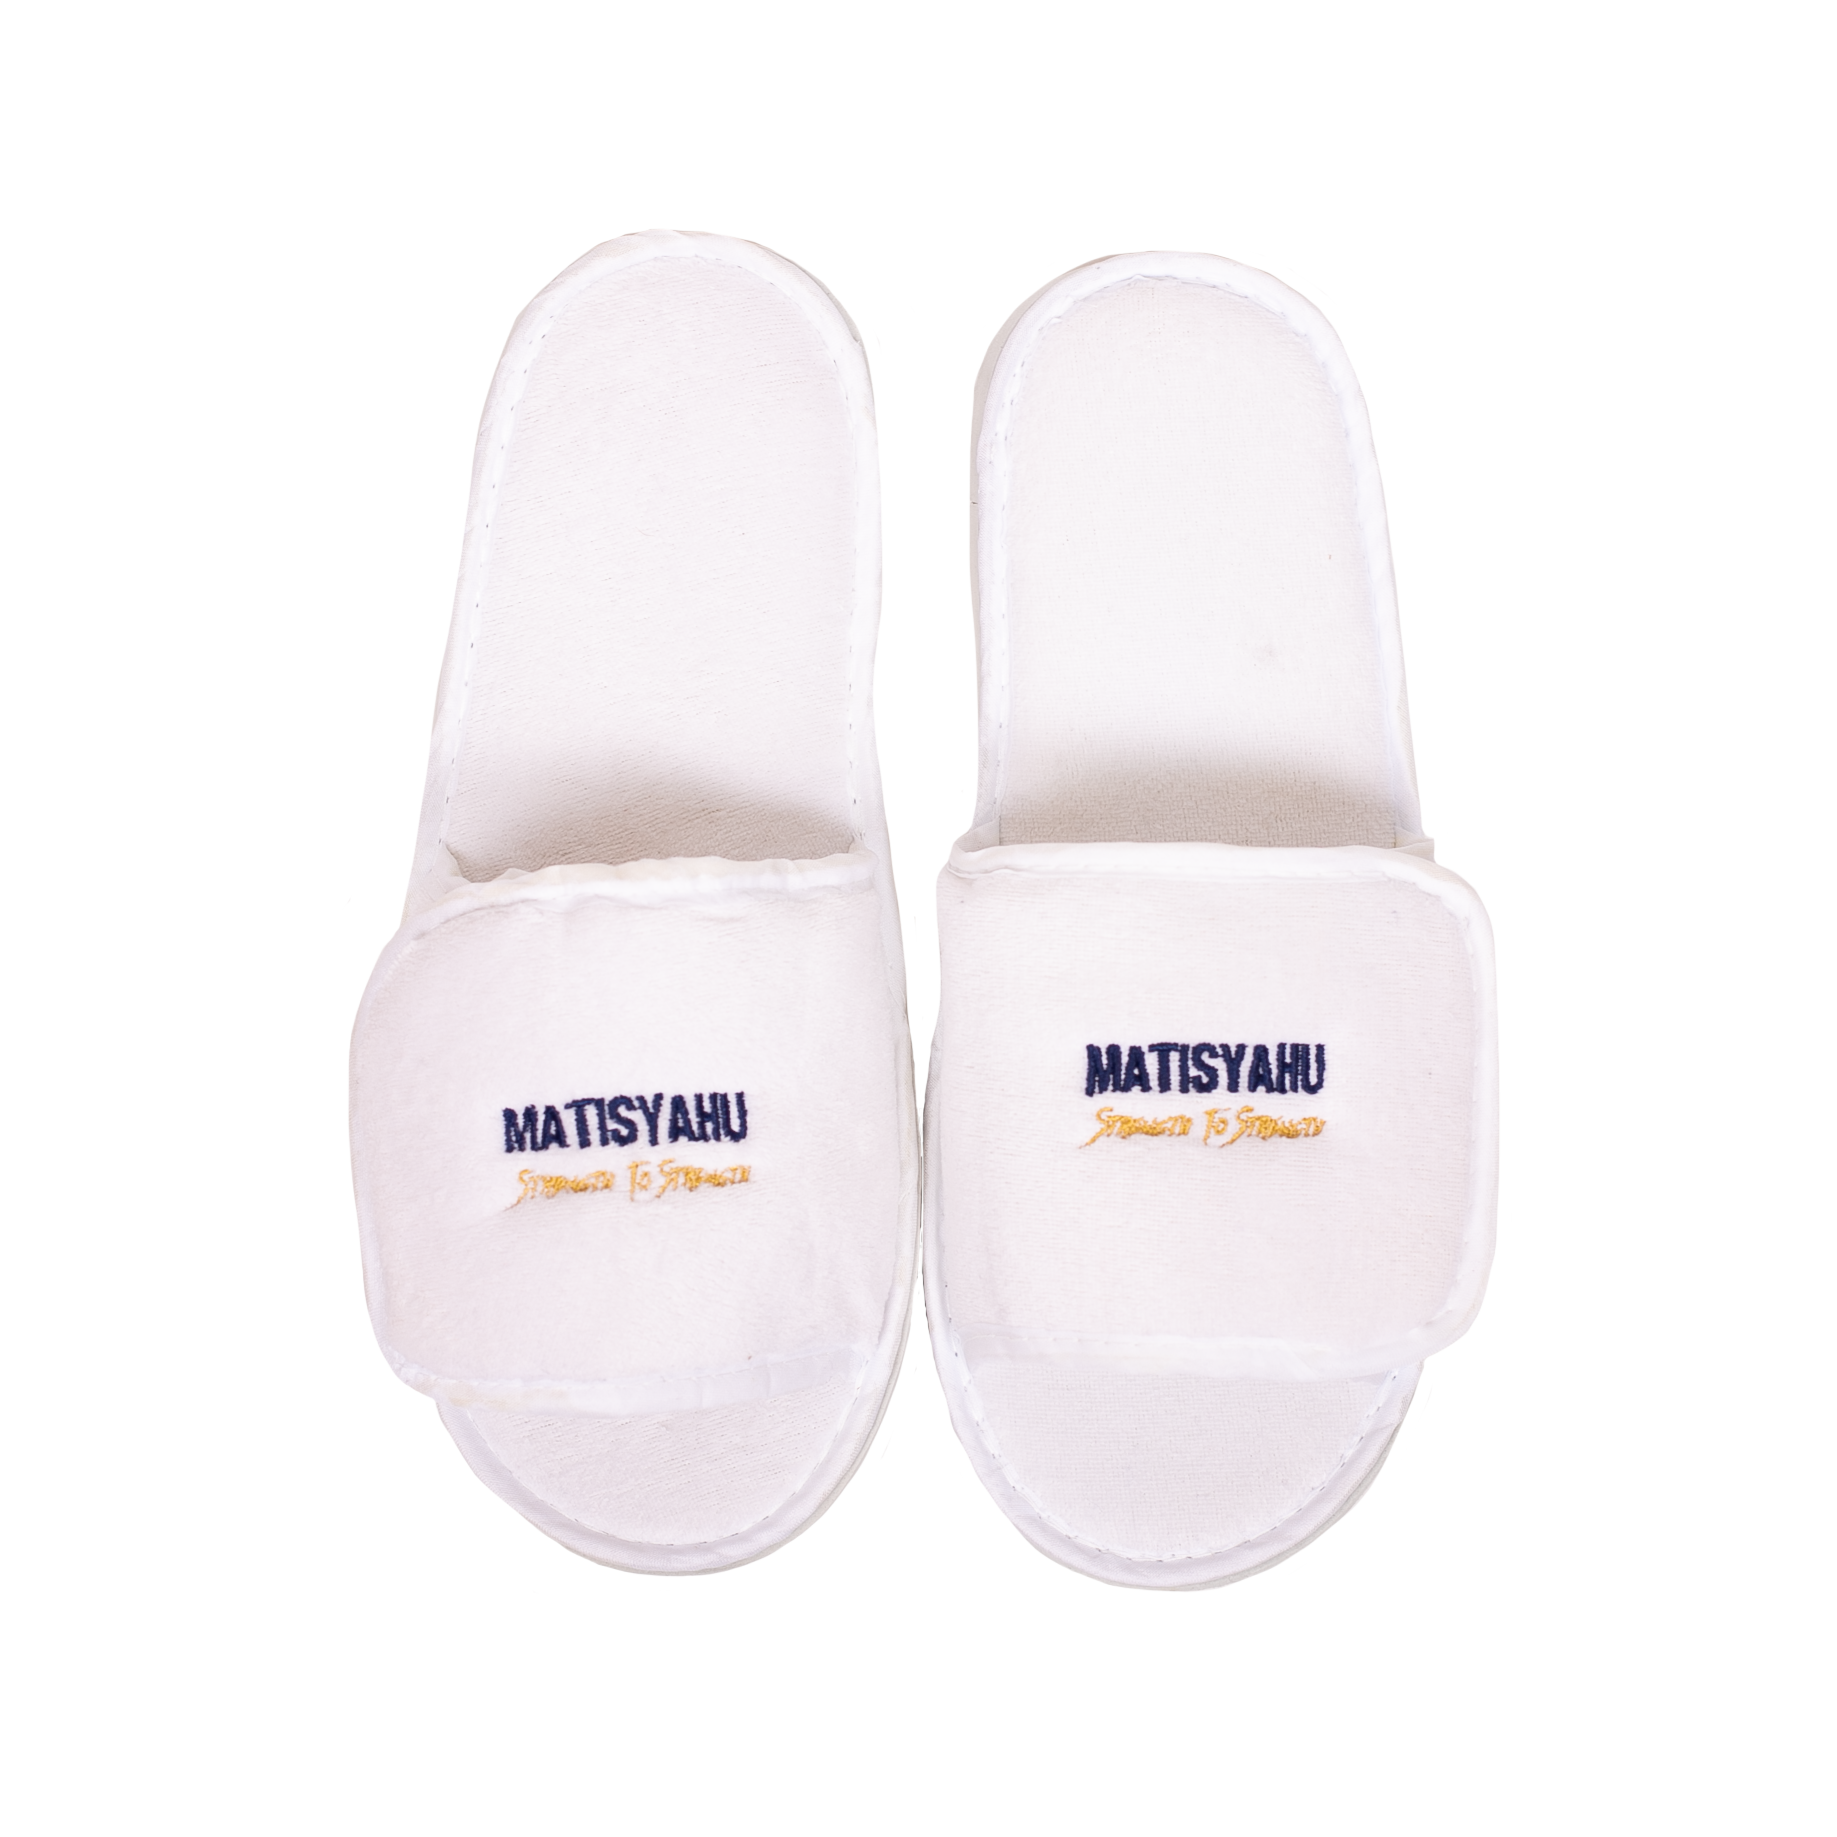 Matisyahu | Strength To Strength Slippers